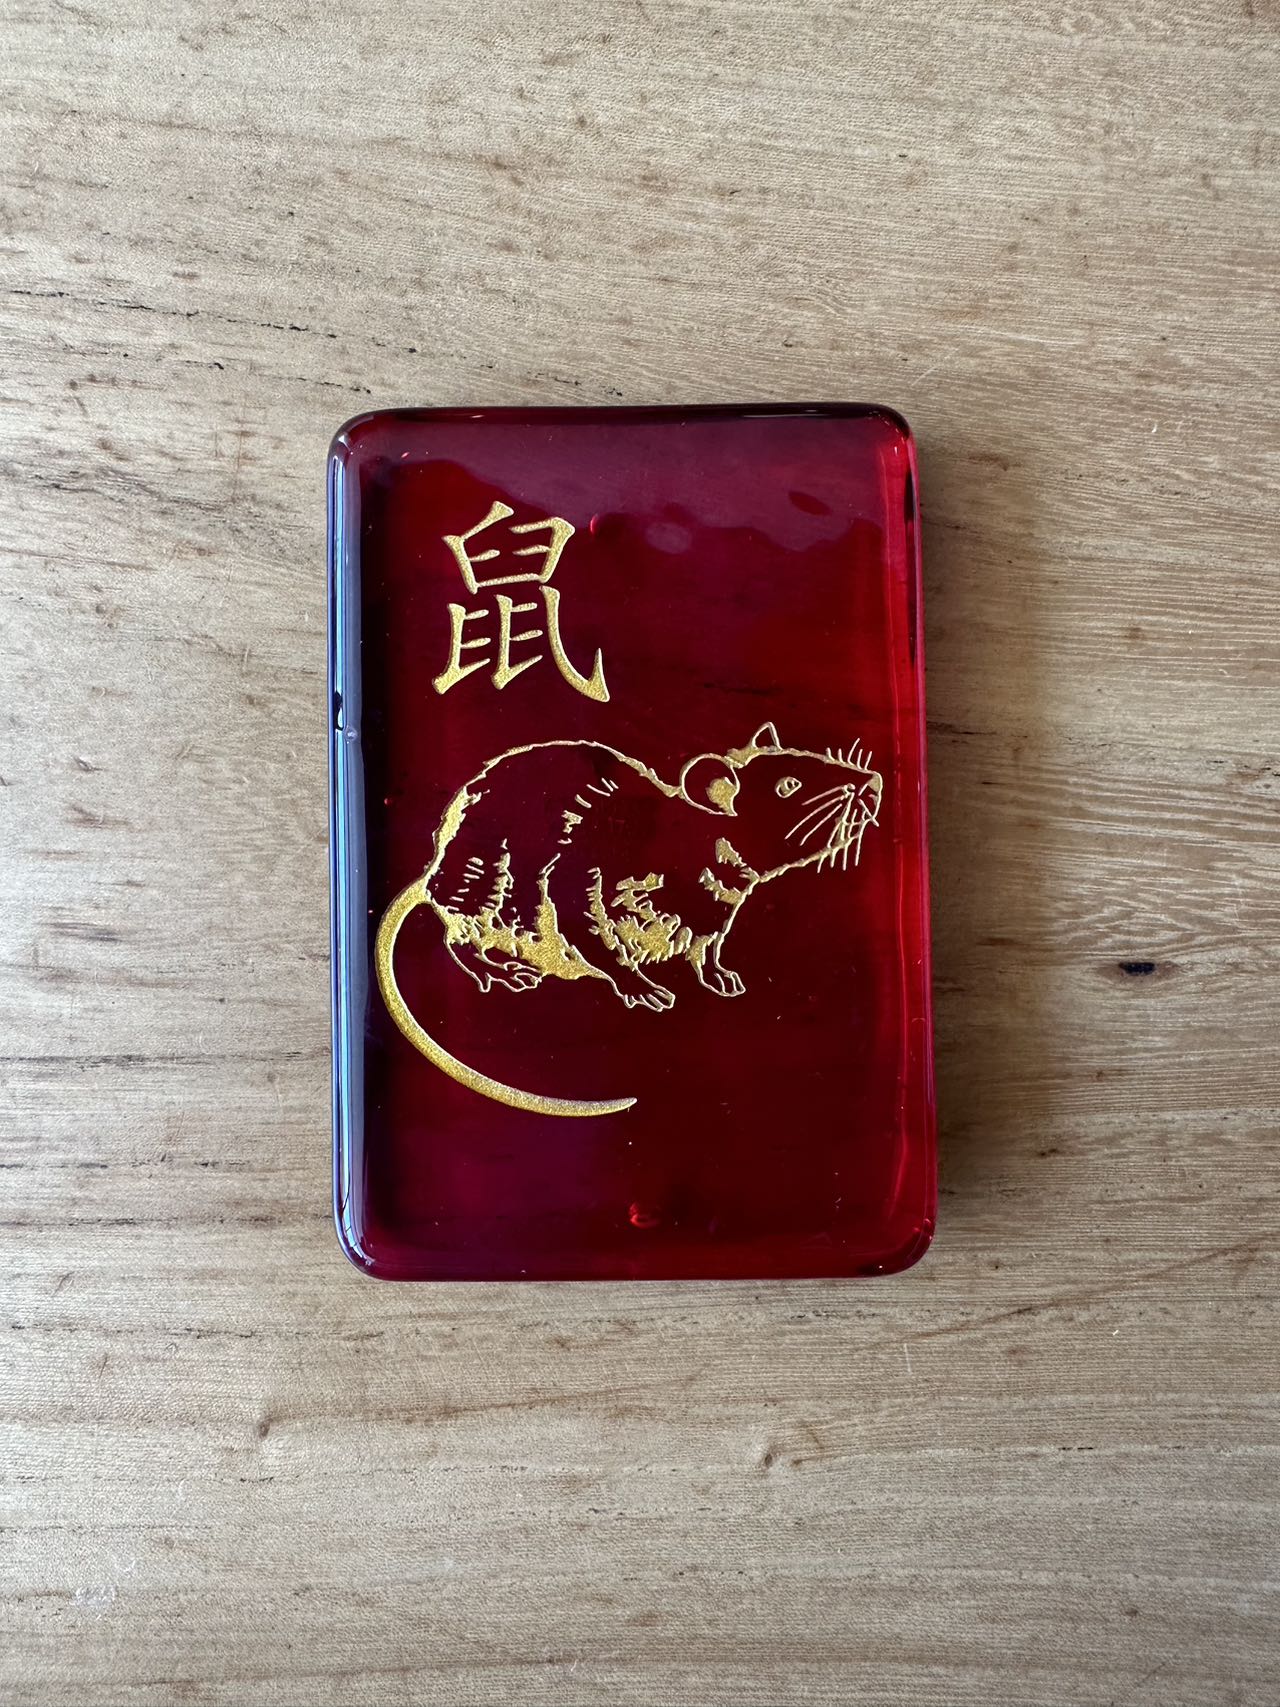 Chinese Zodiac Red Envelopes